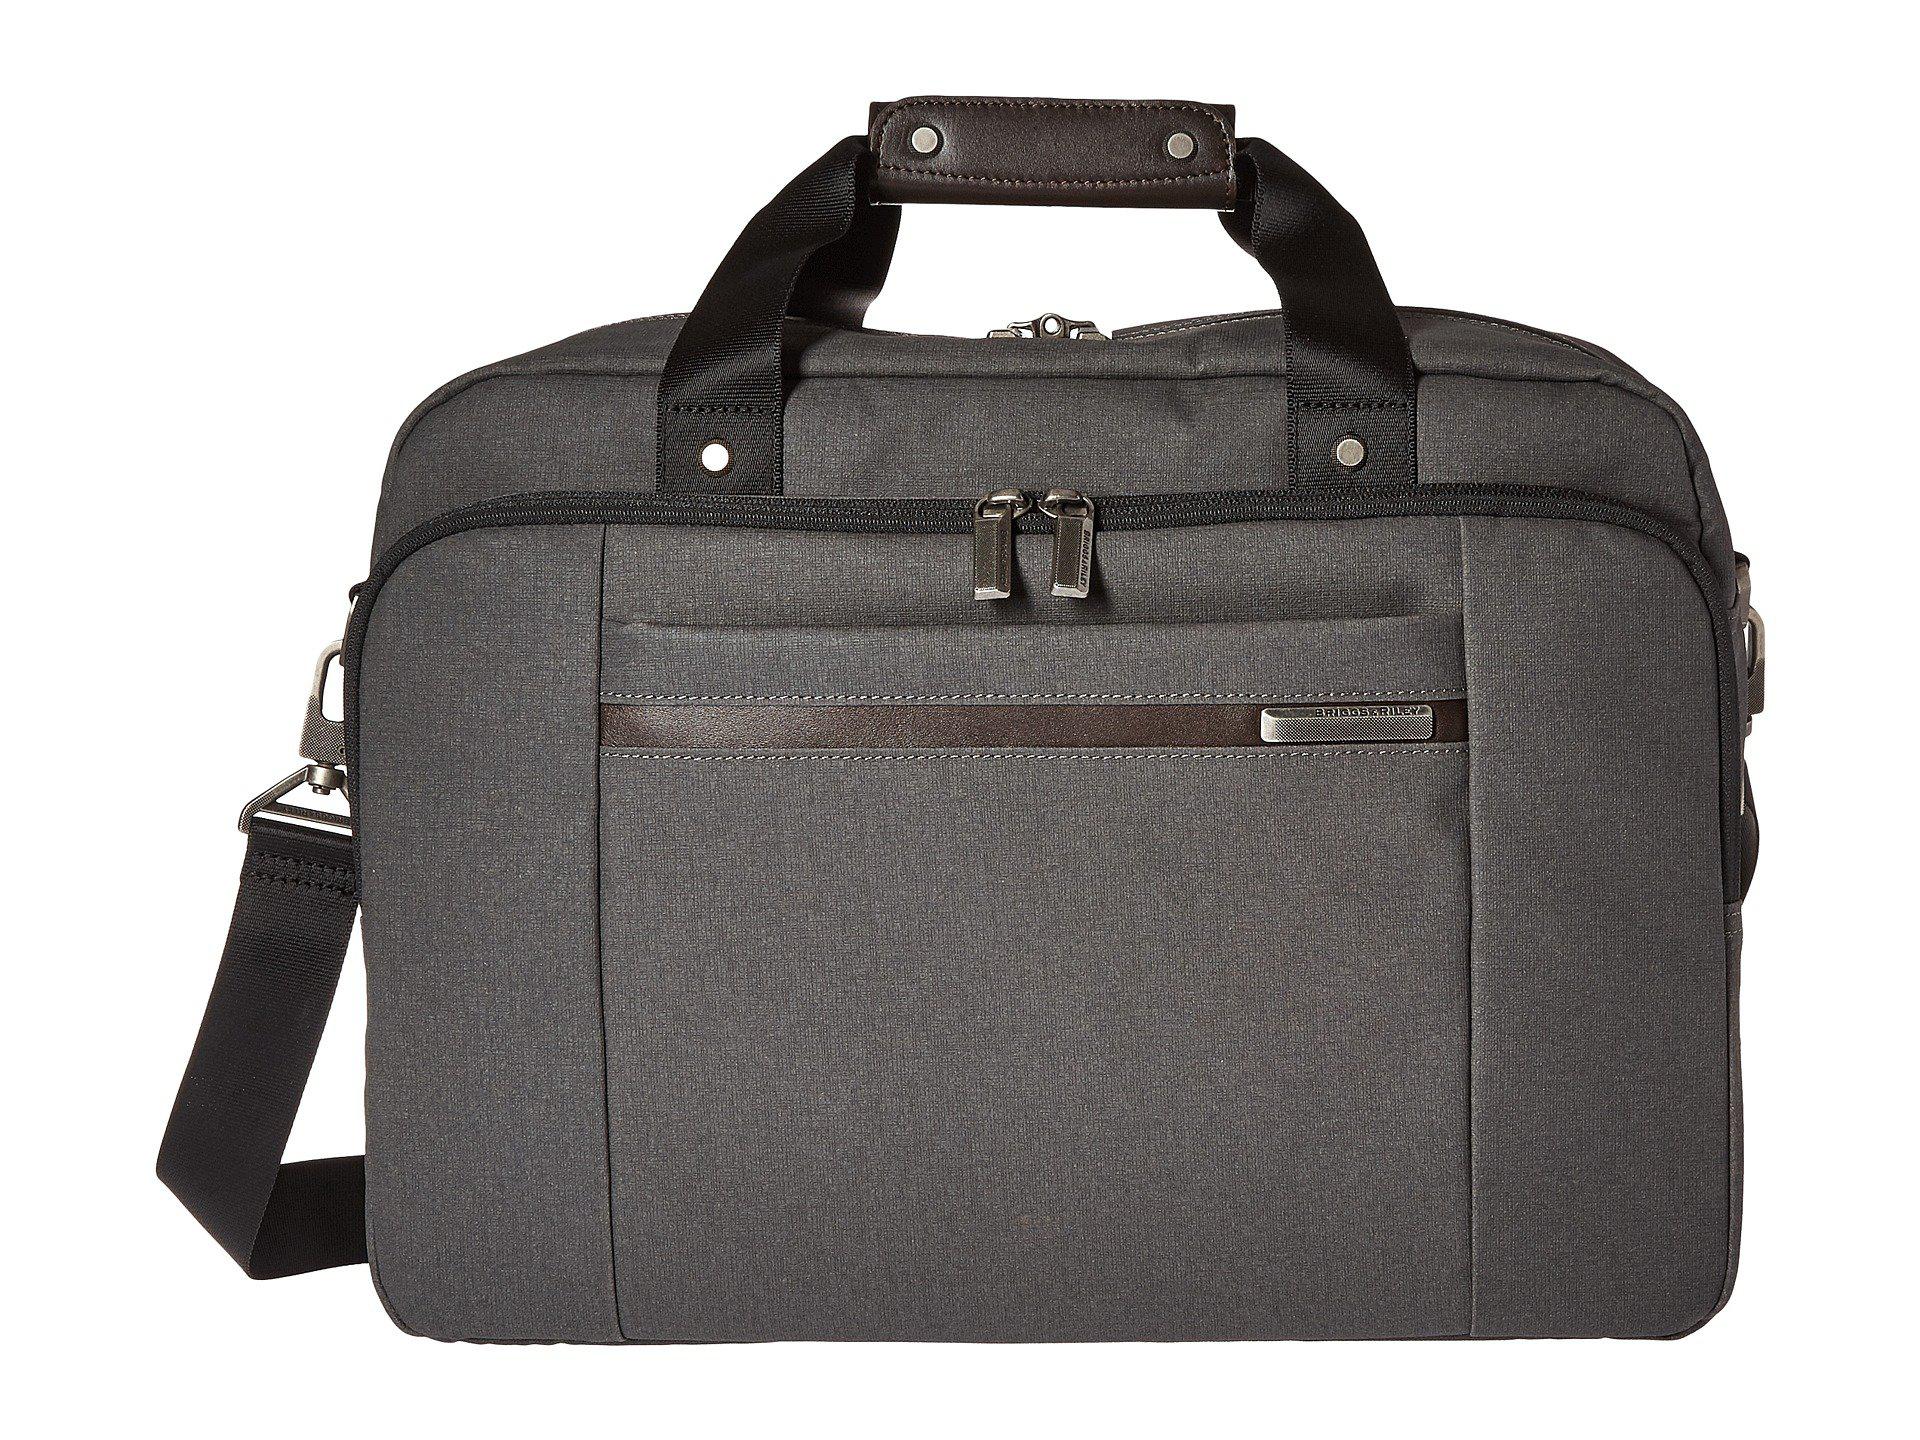 Lyst - Briggs & Riley Kinzie Street - Cabin Bag (grey) Carry On Luggage ...